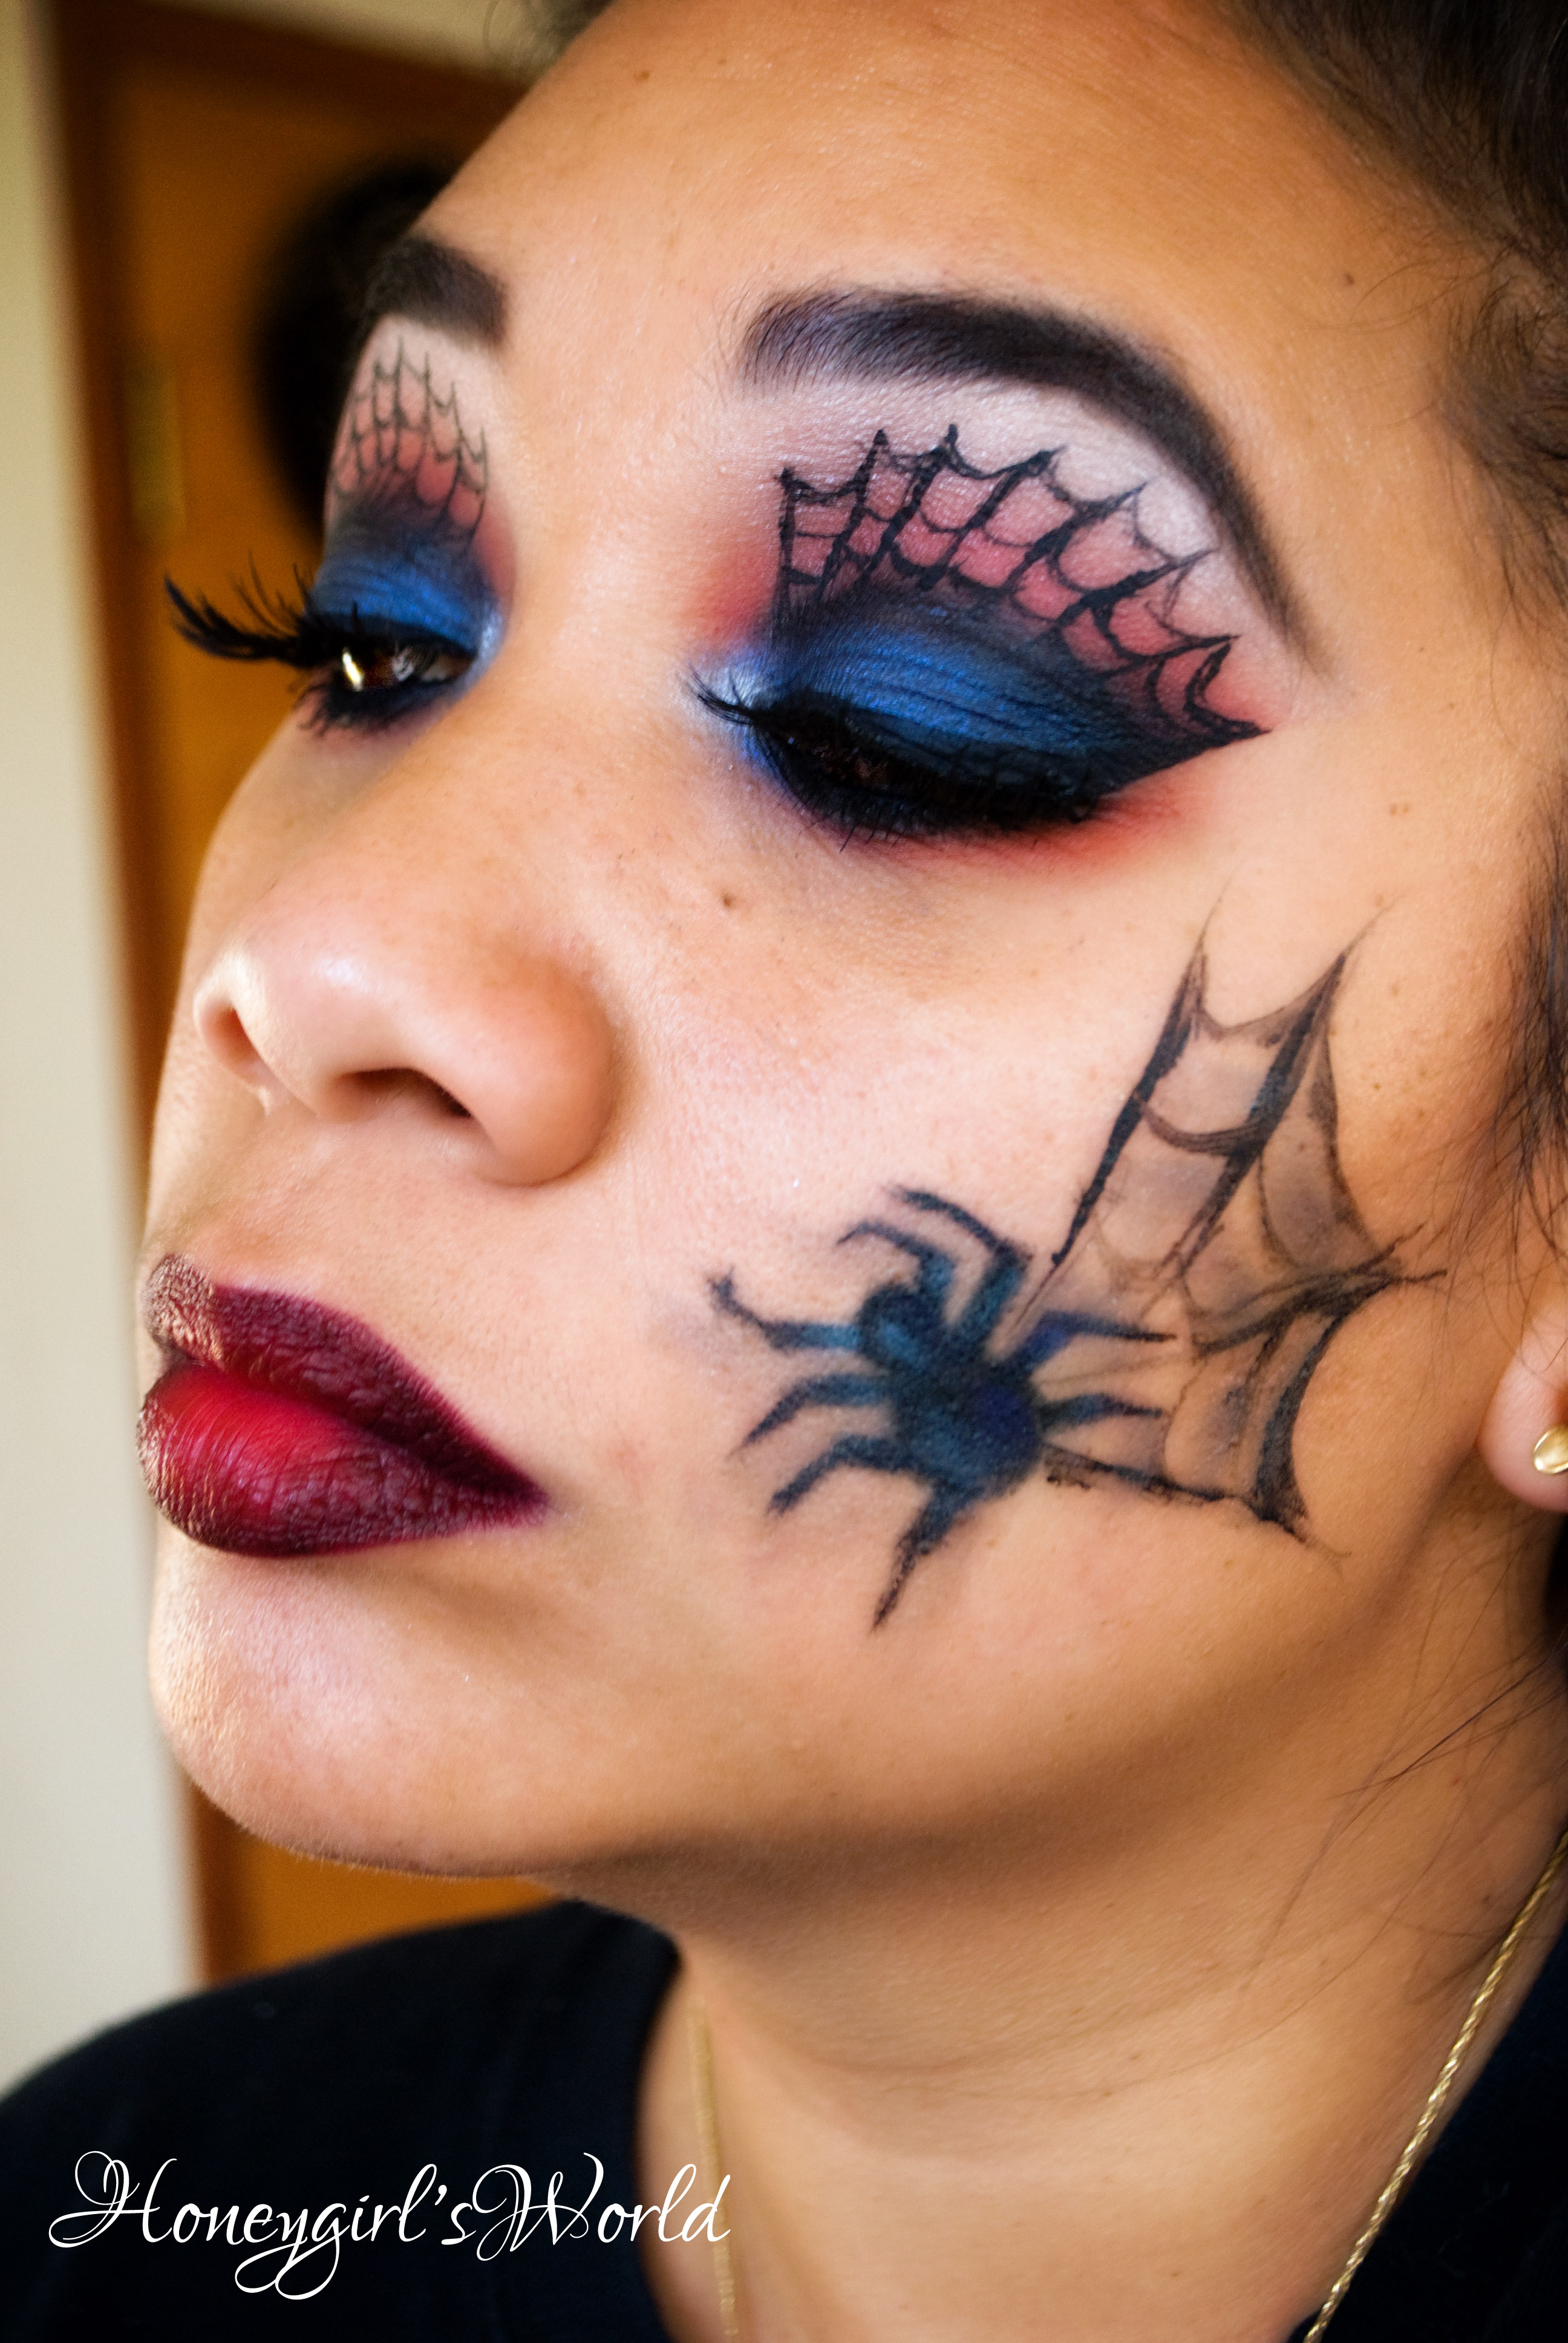 The Amazing Spiderman Makeup